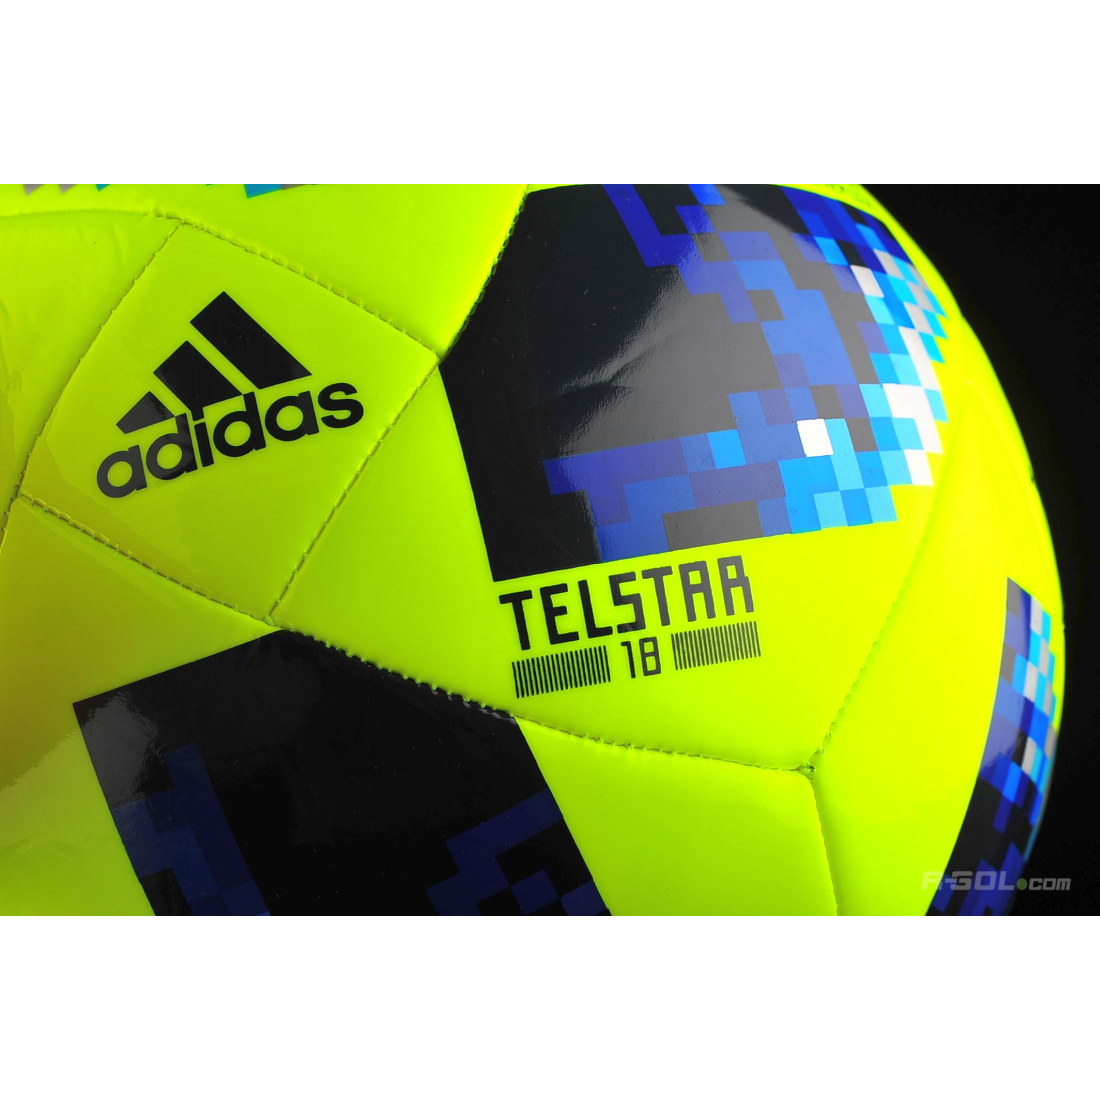 Minge fotbal Adidas World Cup, galben-albastru